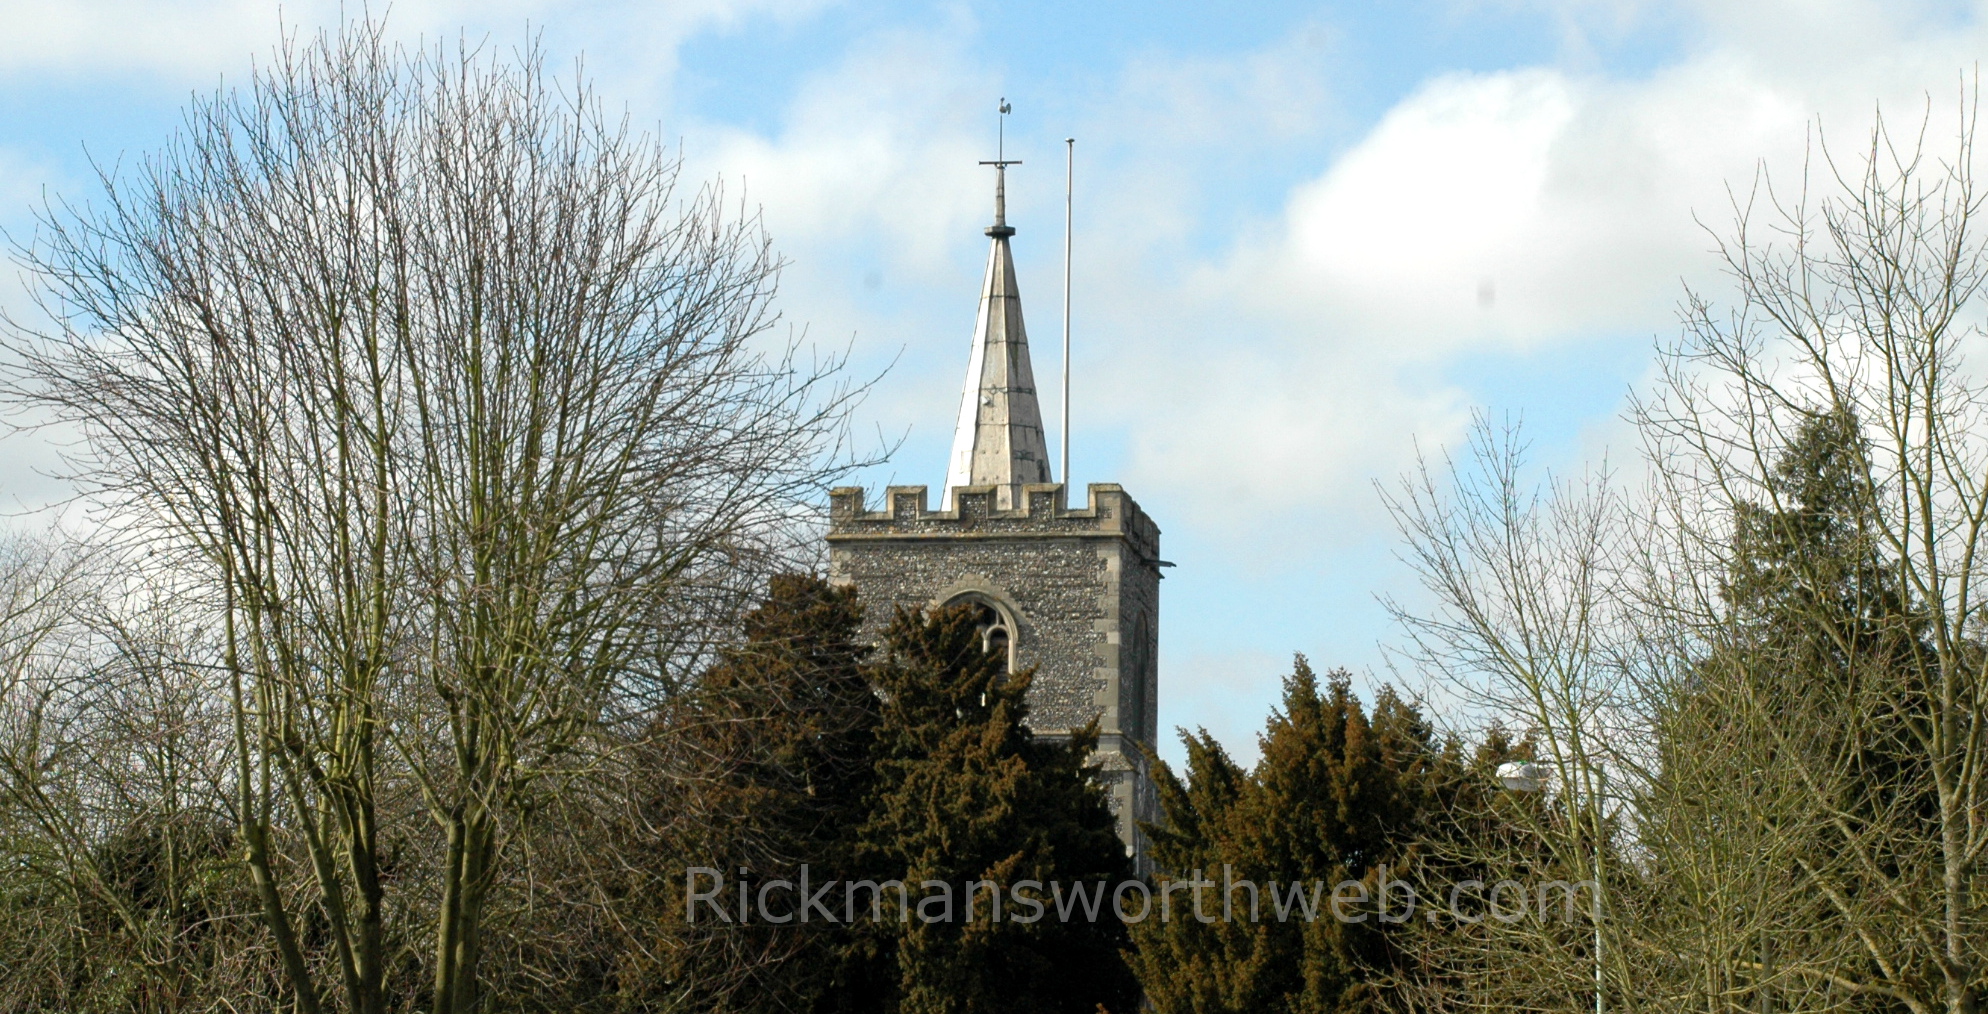 Rickmansworth church in the Spring sun